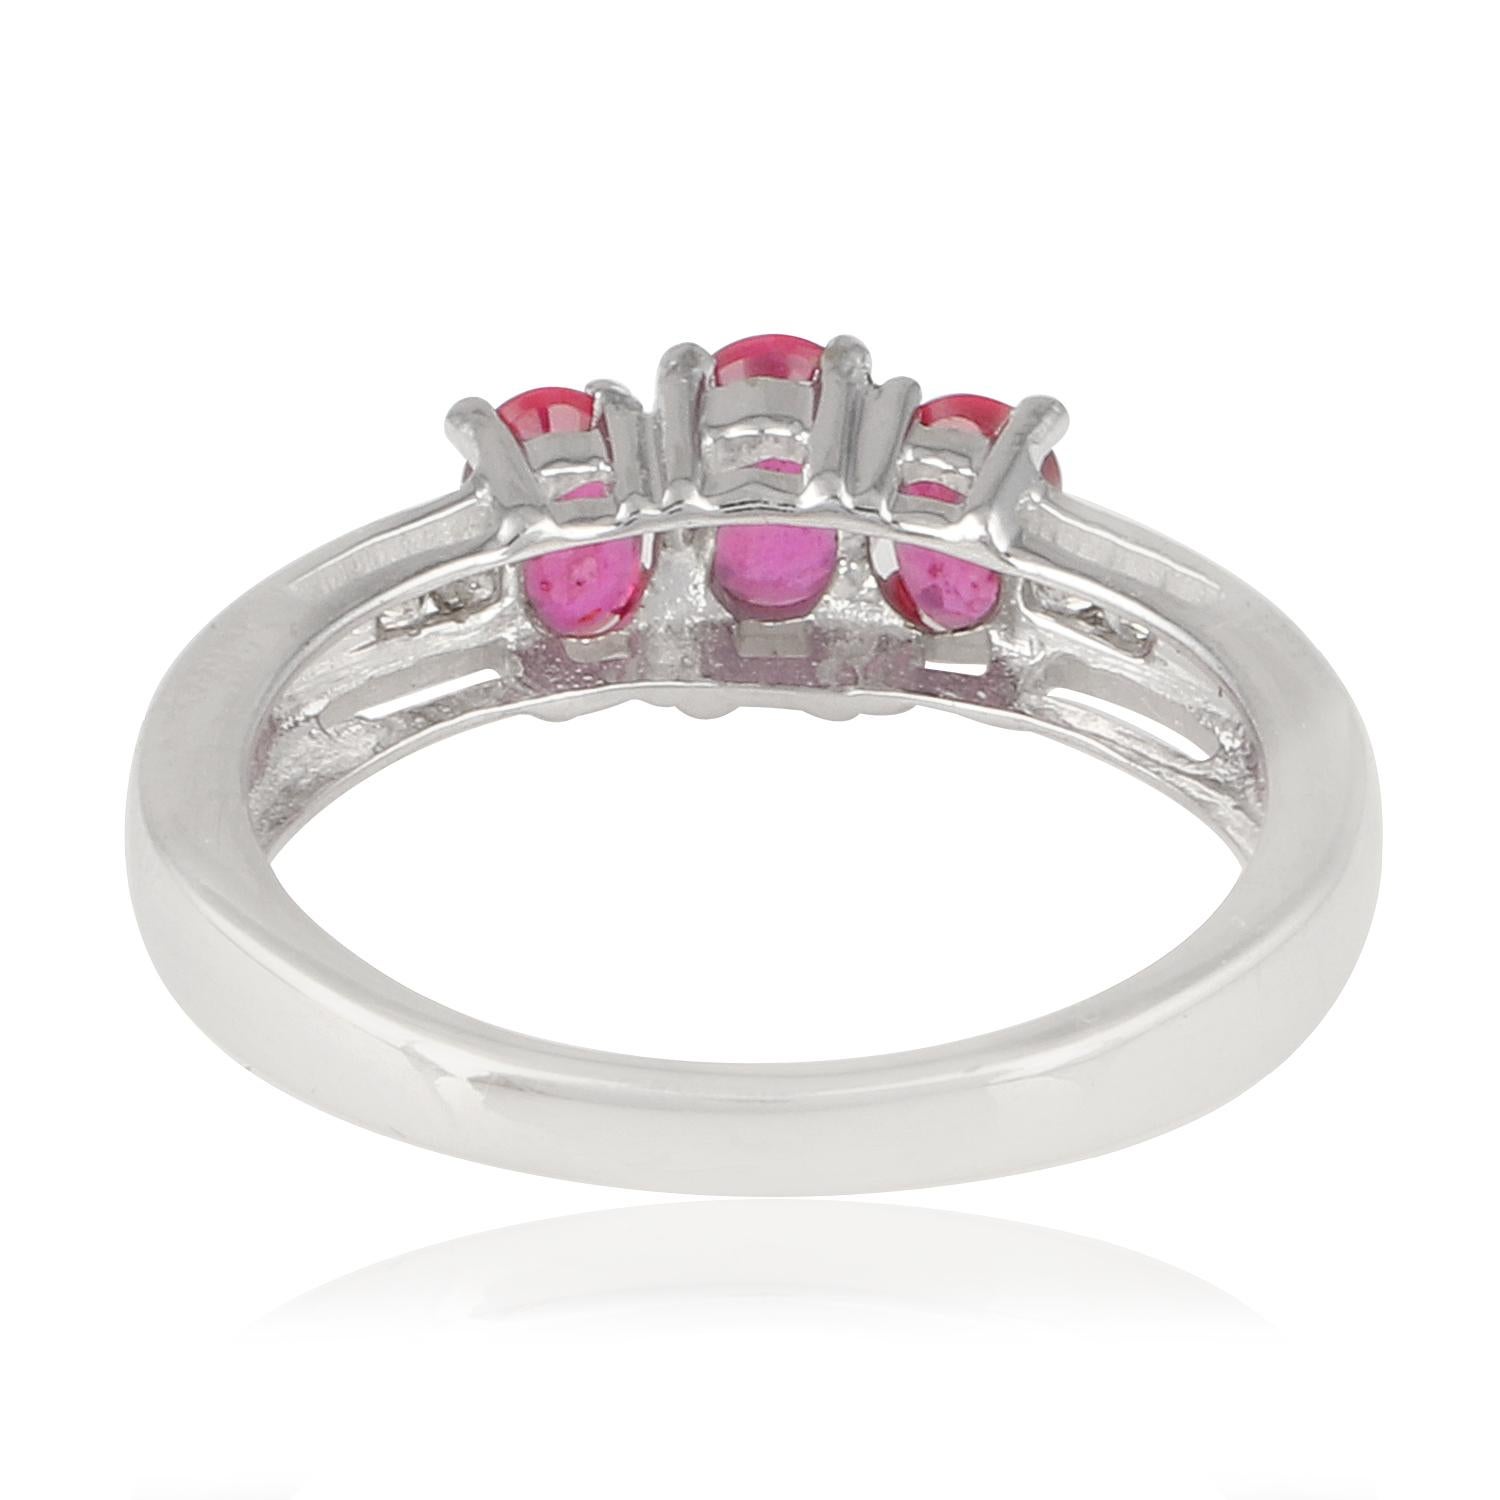 For Sale:  Real Three Ruby Gemstone Ring Diamond Pave 9 Karat White Gold Handmade Jewelry 2